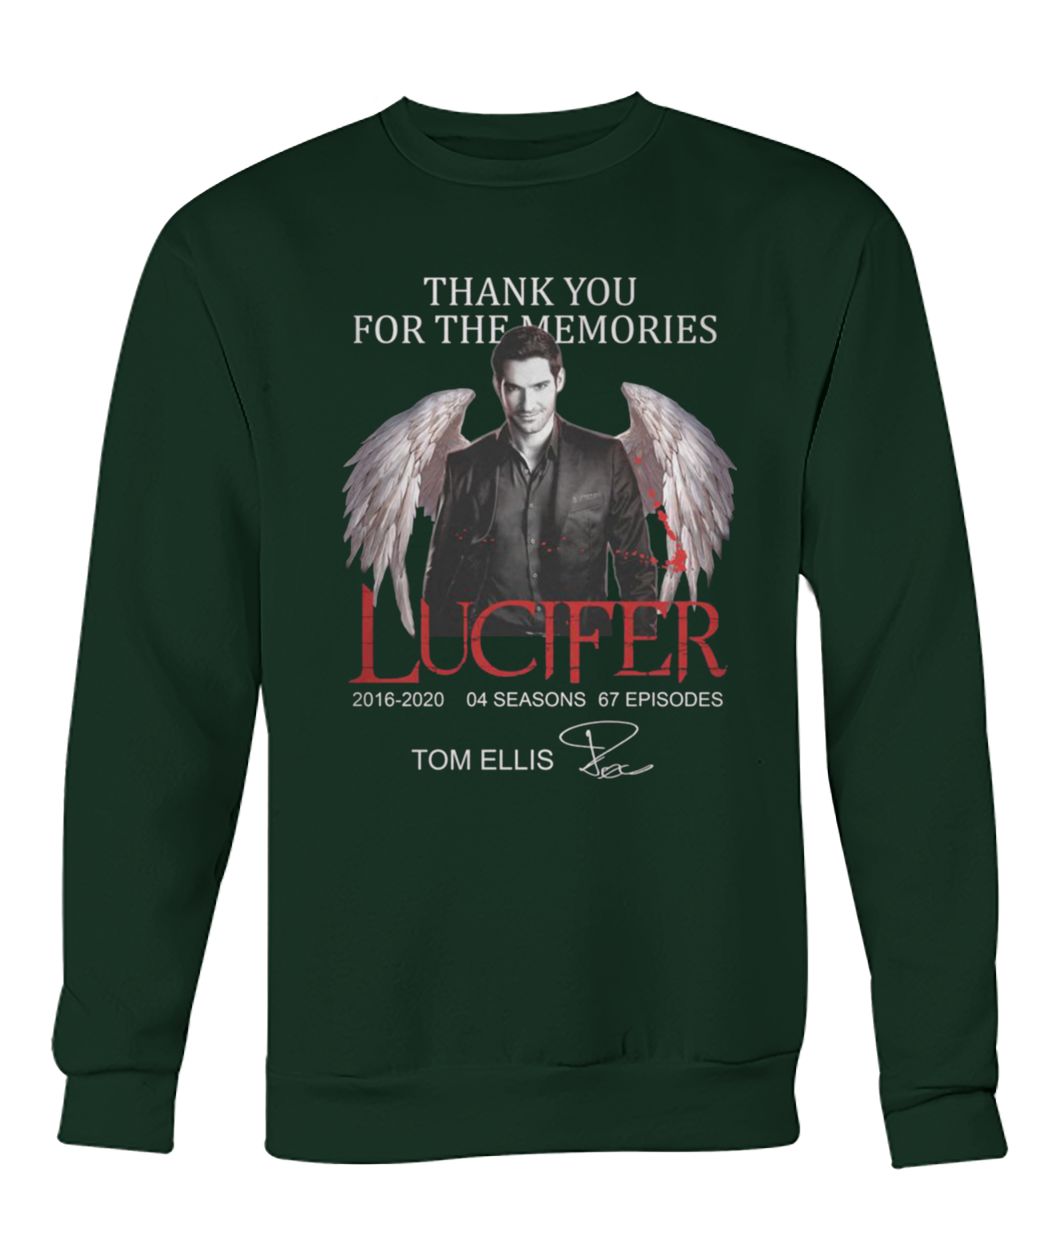 Thank you for the memories lucifer 2016-2020 04 season 67 episodes tom ellis signature crew neck sweatshirt